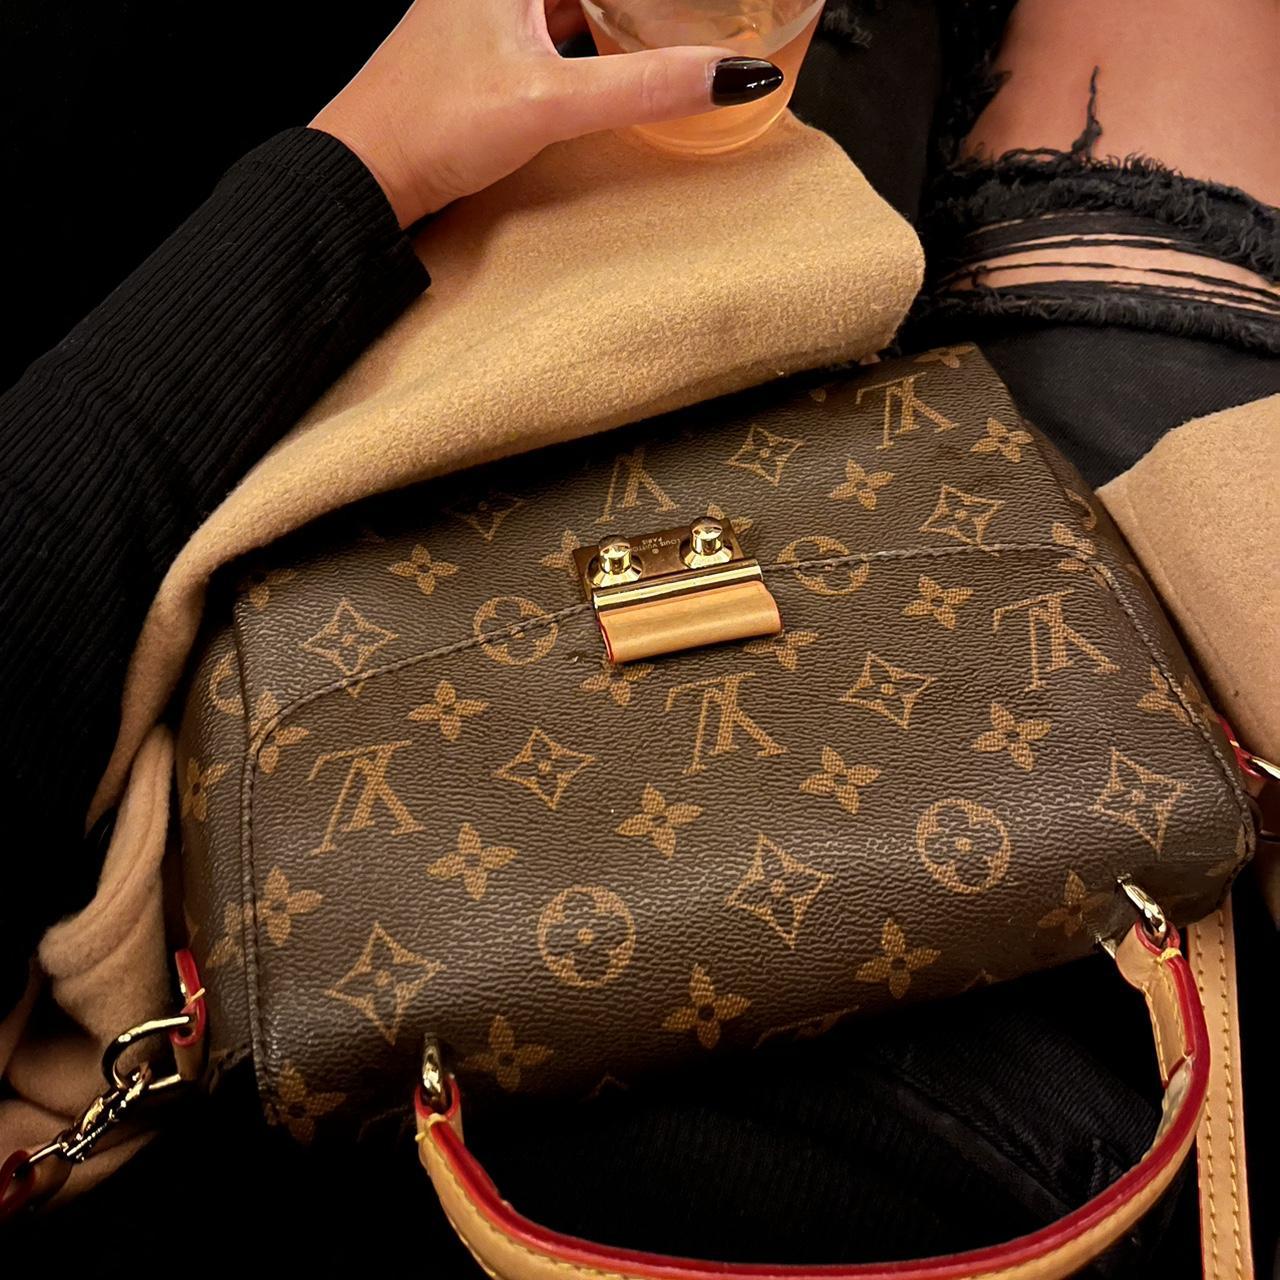 Louis Vuitton multiple wallet Damier Ebene mens - Depop